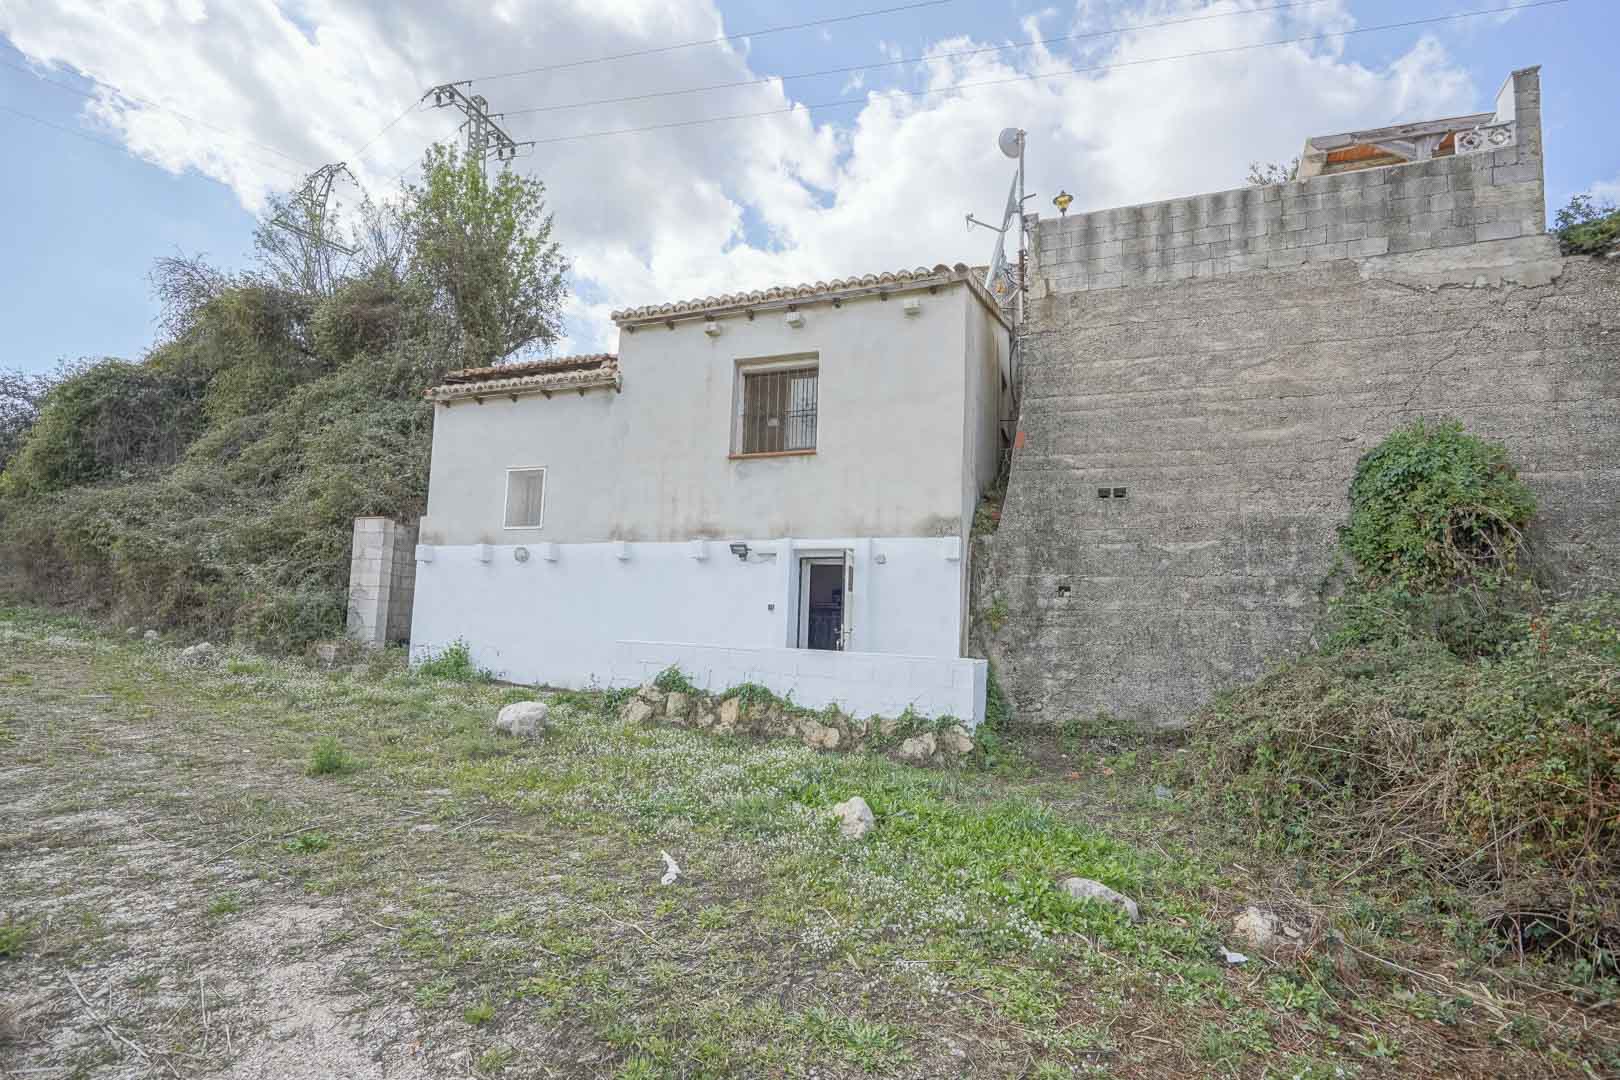 Verkoop. Villa in Alcalali